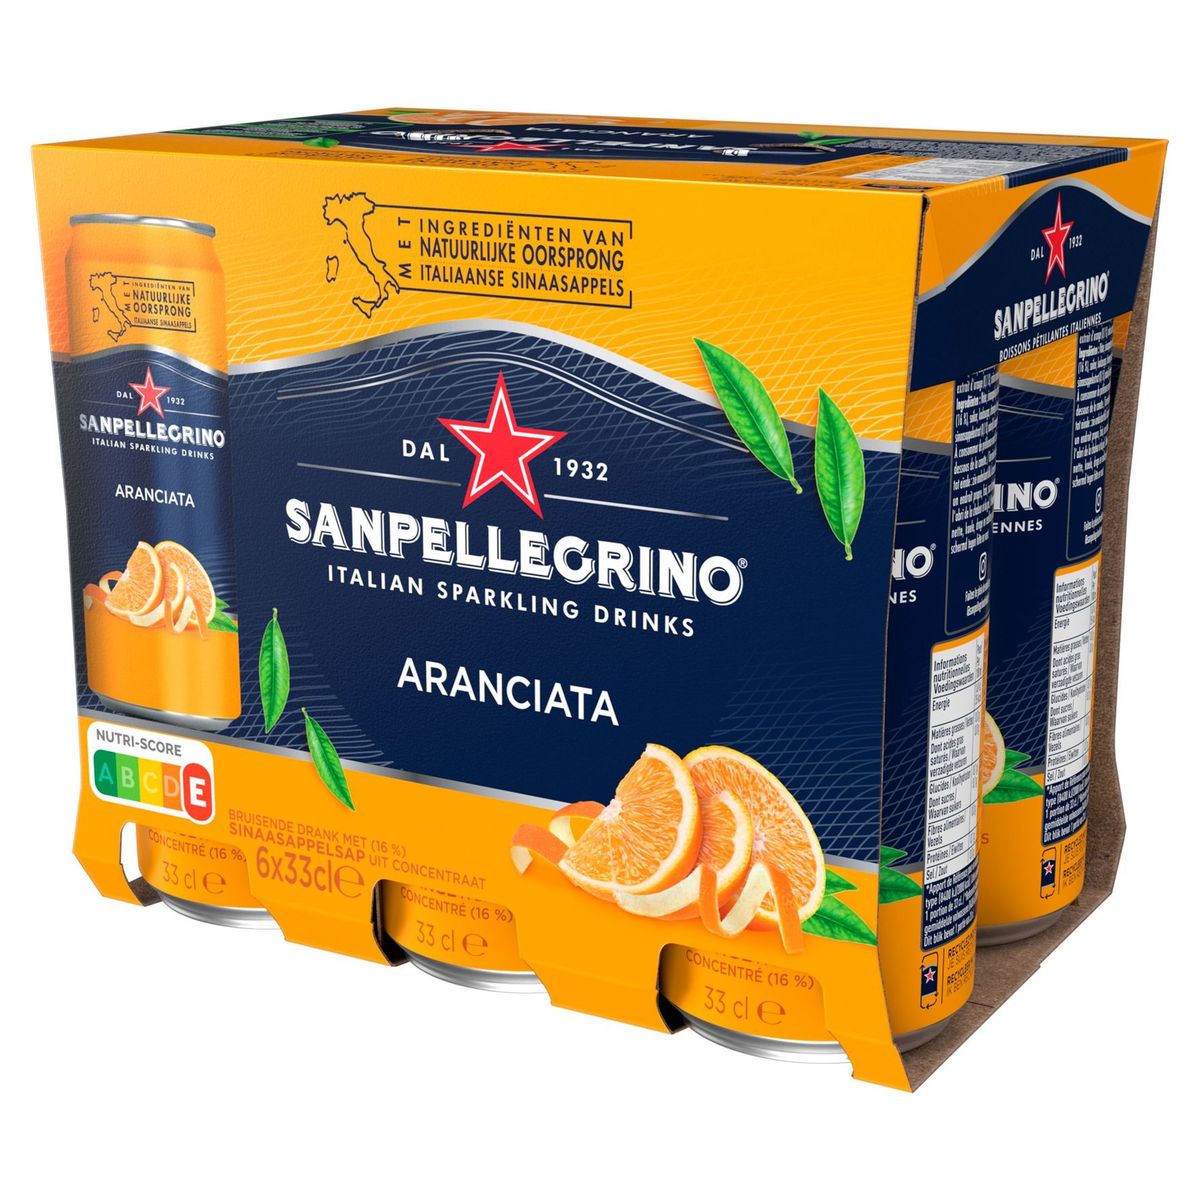 Sanpellegrino Limonade aranciata 6 x 33cl